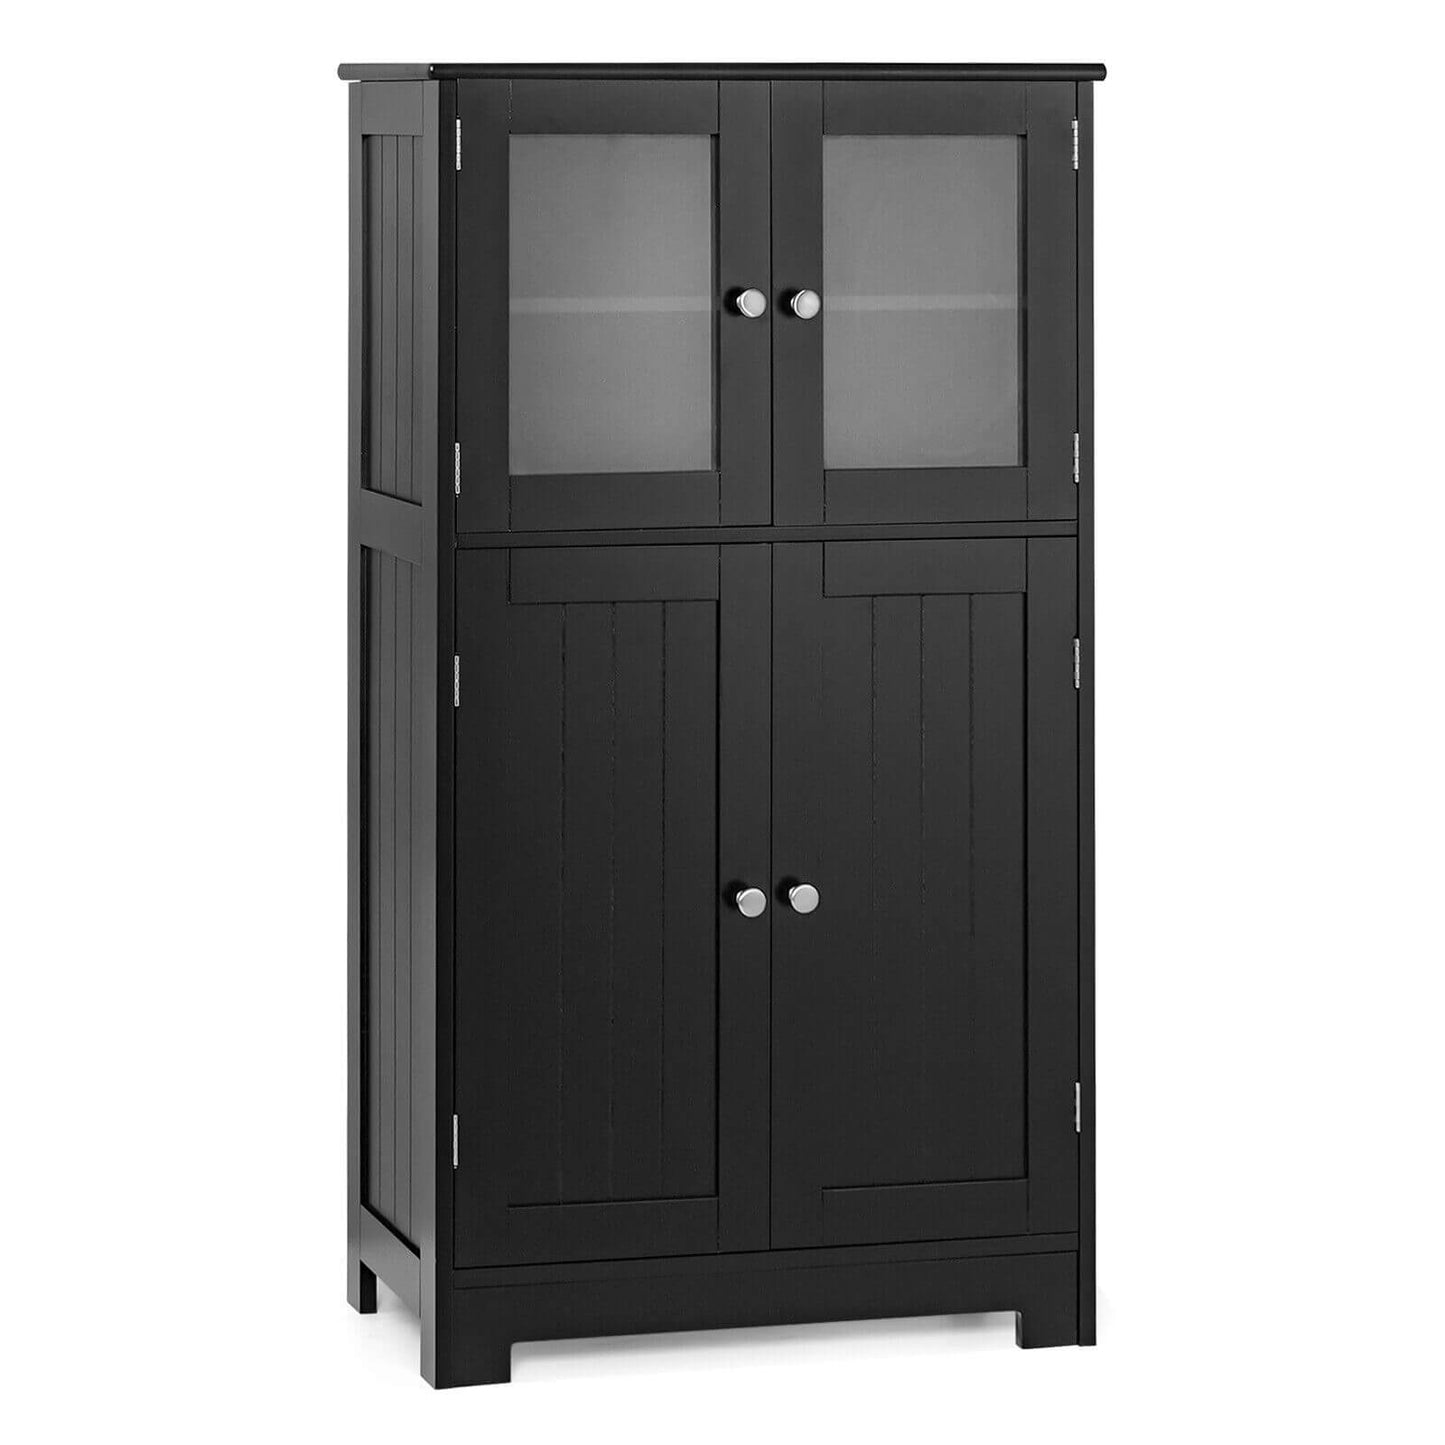 Bathroom Floor Storage Locker Kitchen Cabinet with Doors and Adjustable Shelf, Black at Gallery Canada